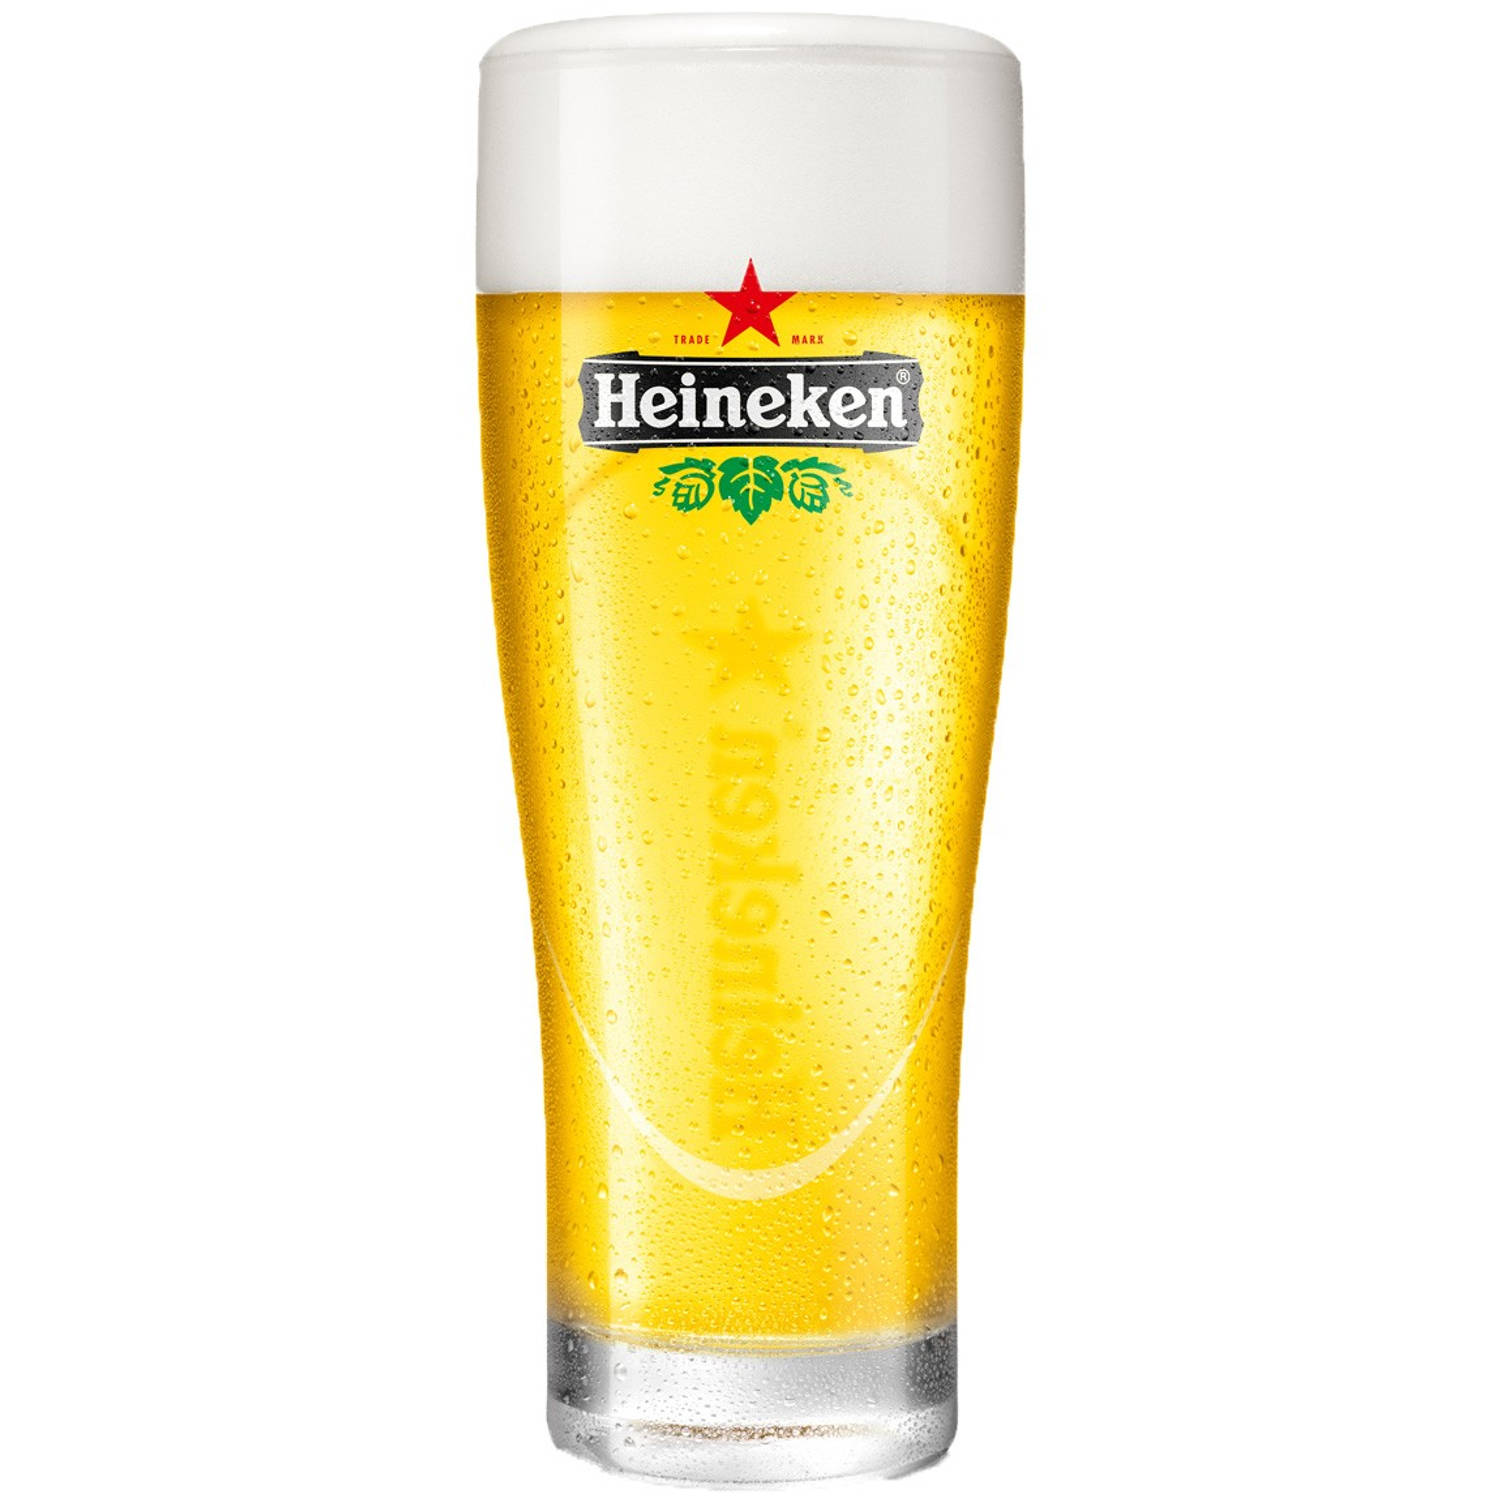 Heineken Ellipse Bierglas 25cl - Bier Glas 0,25 l - 250 ml